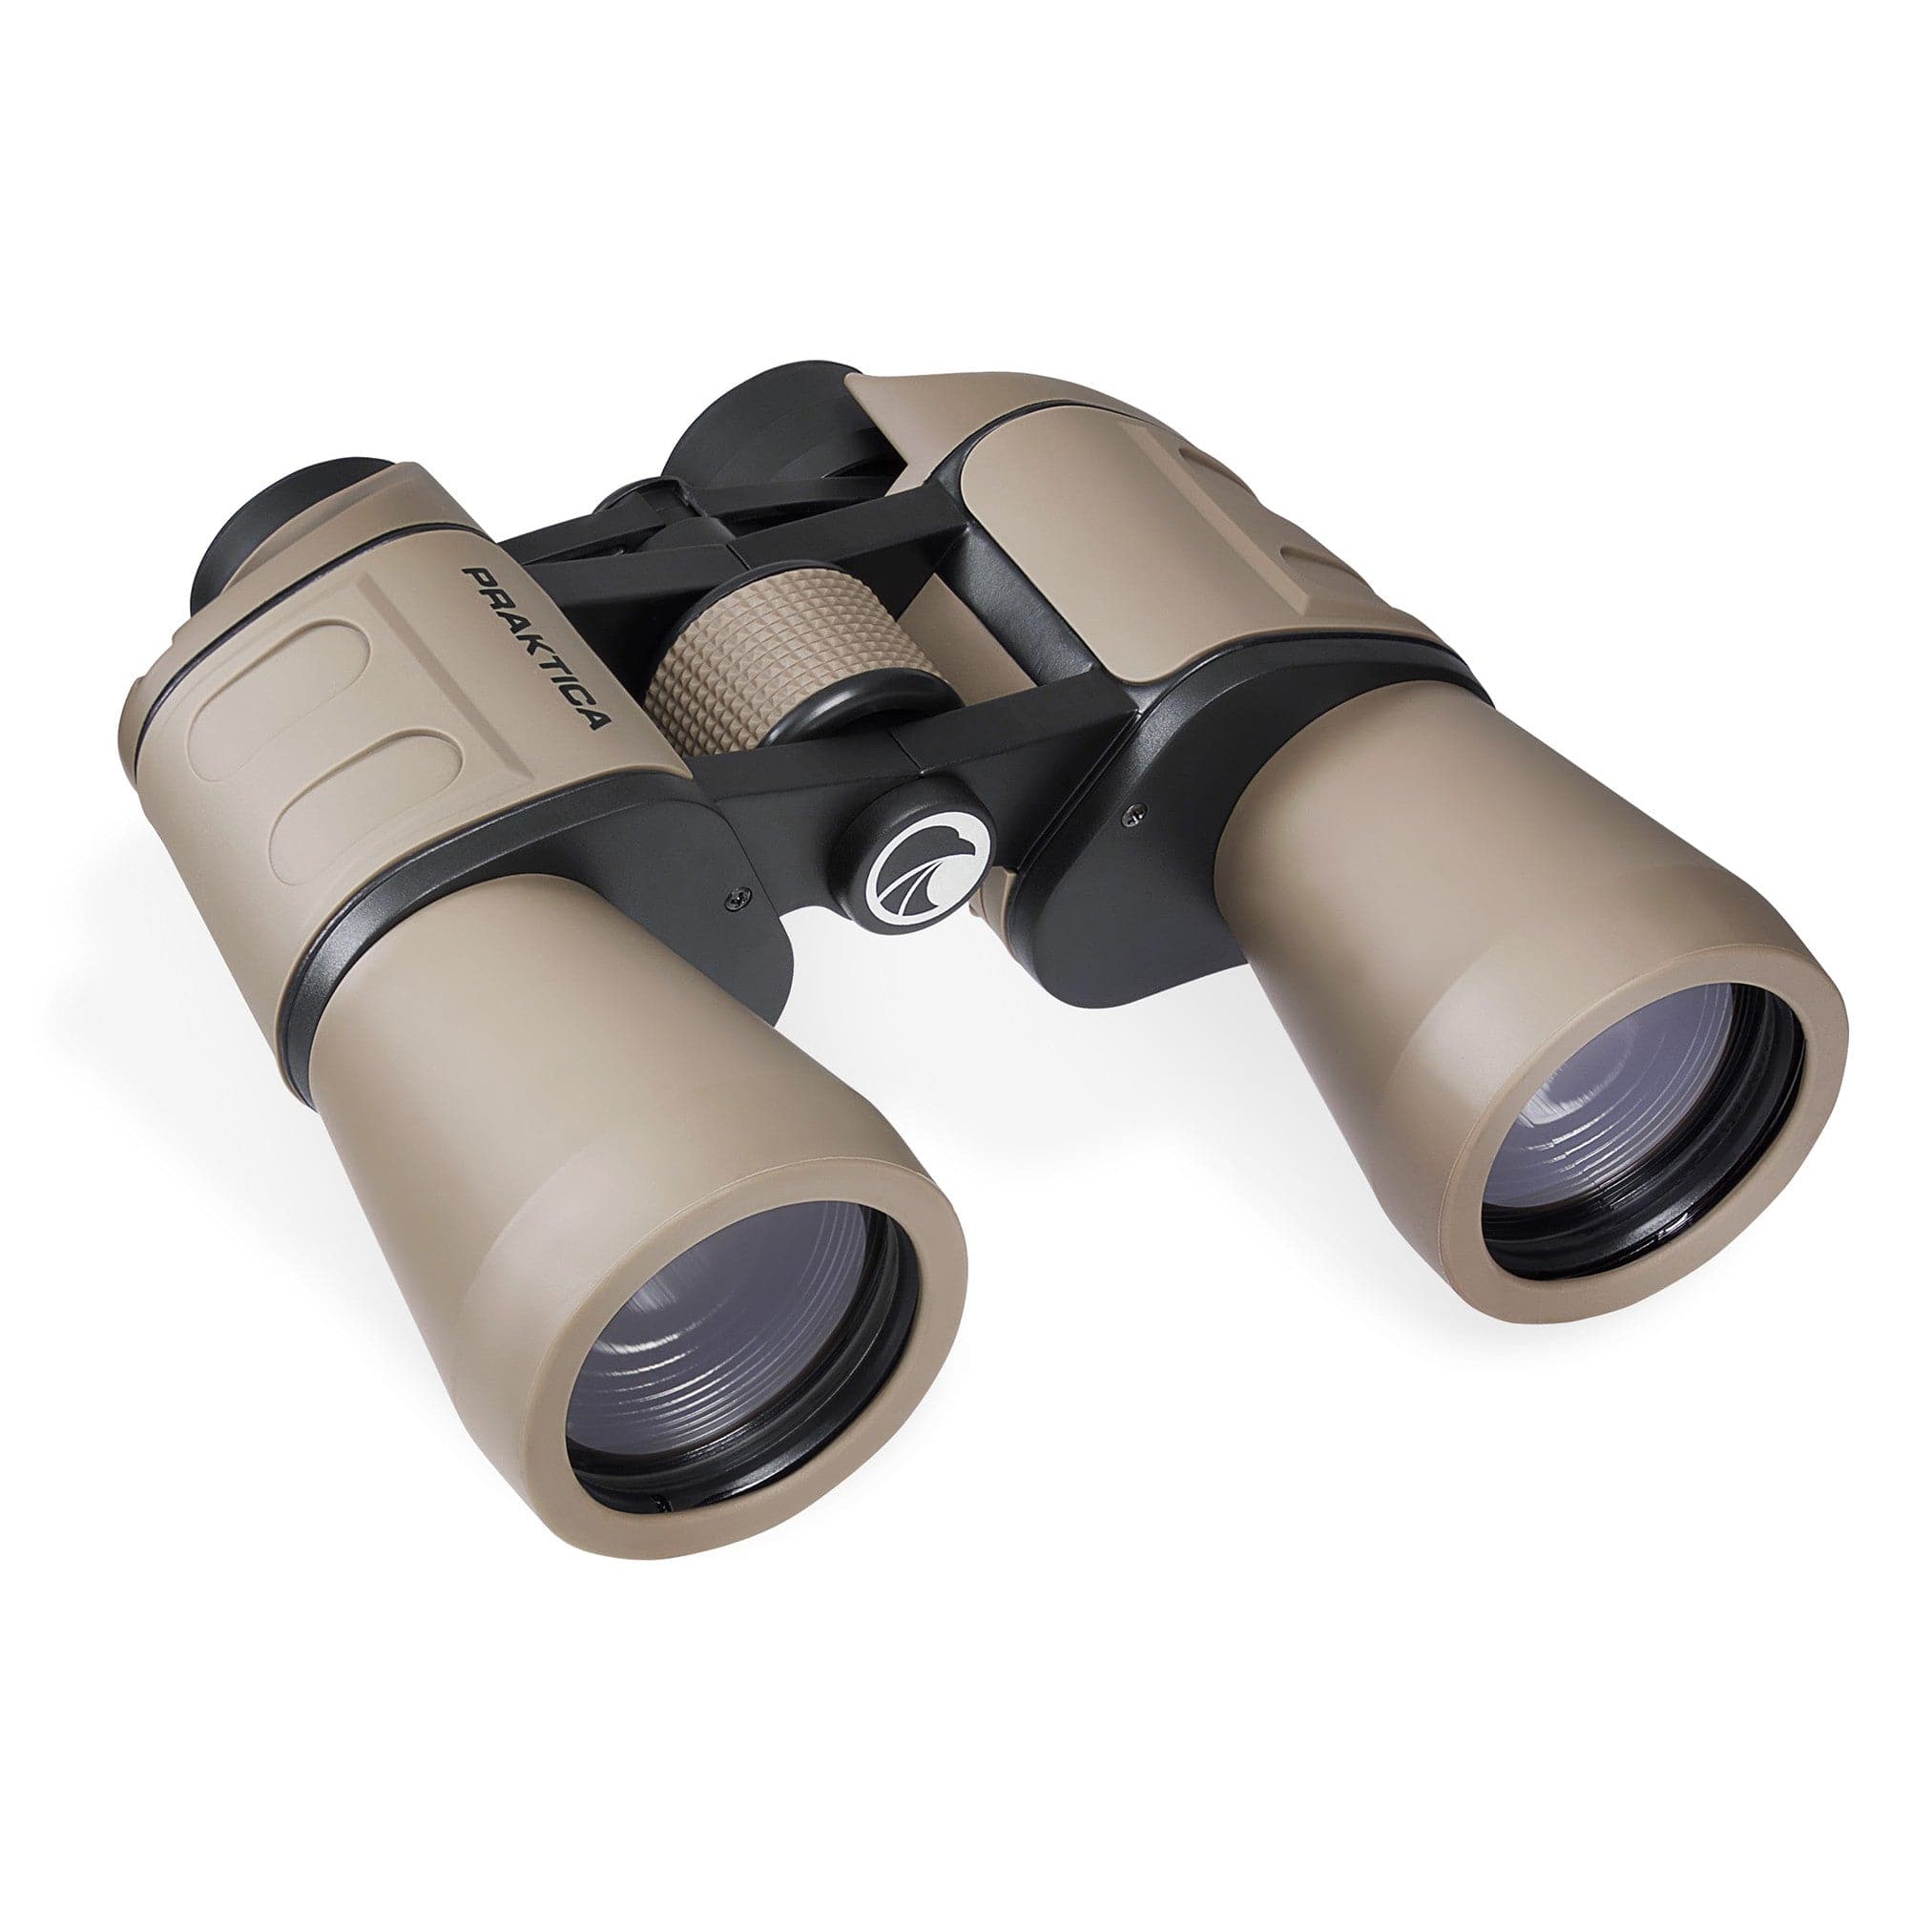 PRAKTICA Falcon 10x50mm Porro Prism Field Binoculars - Sand (Binoculars Only)